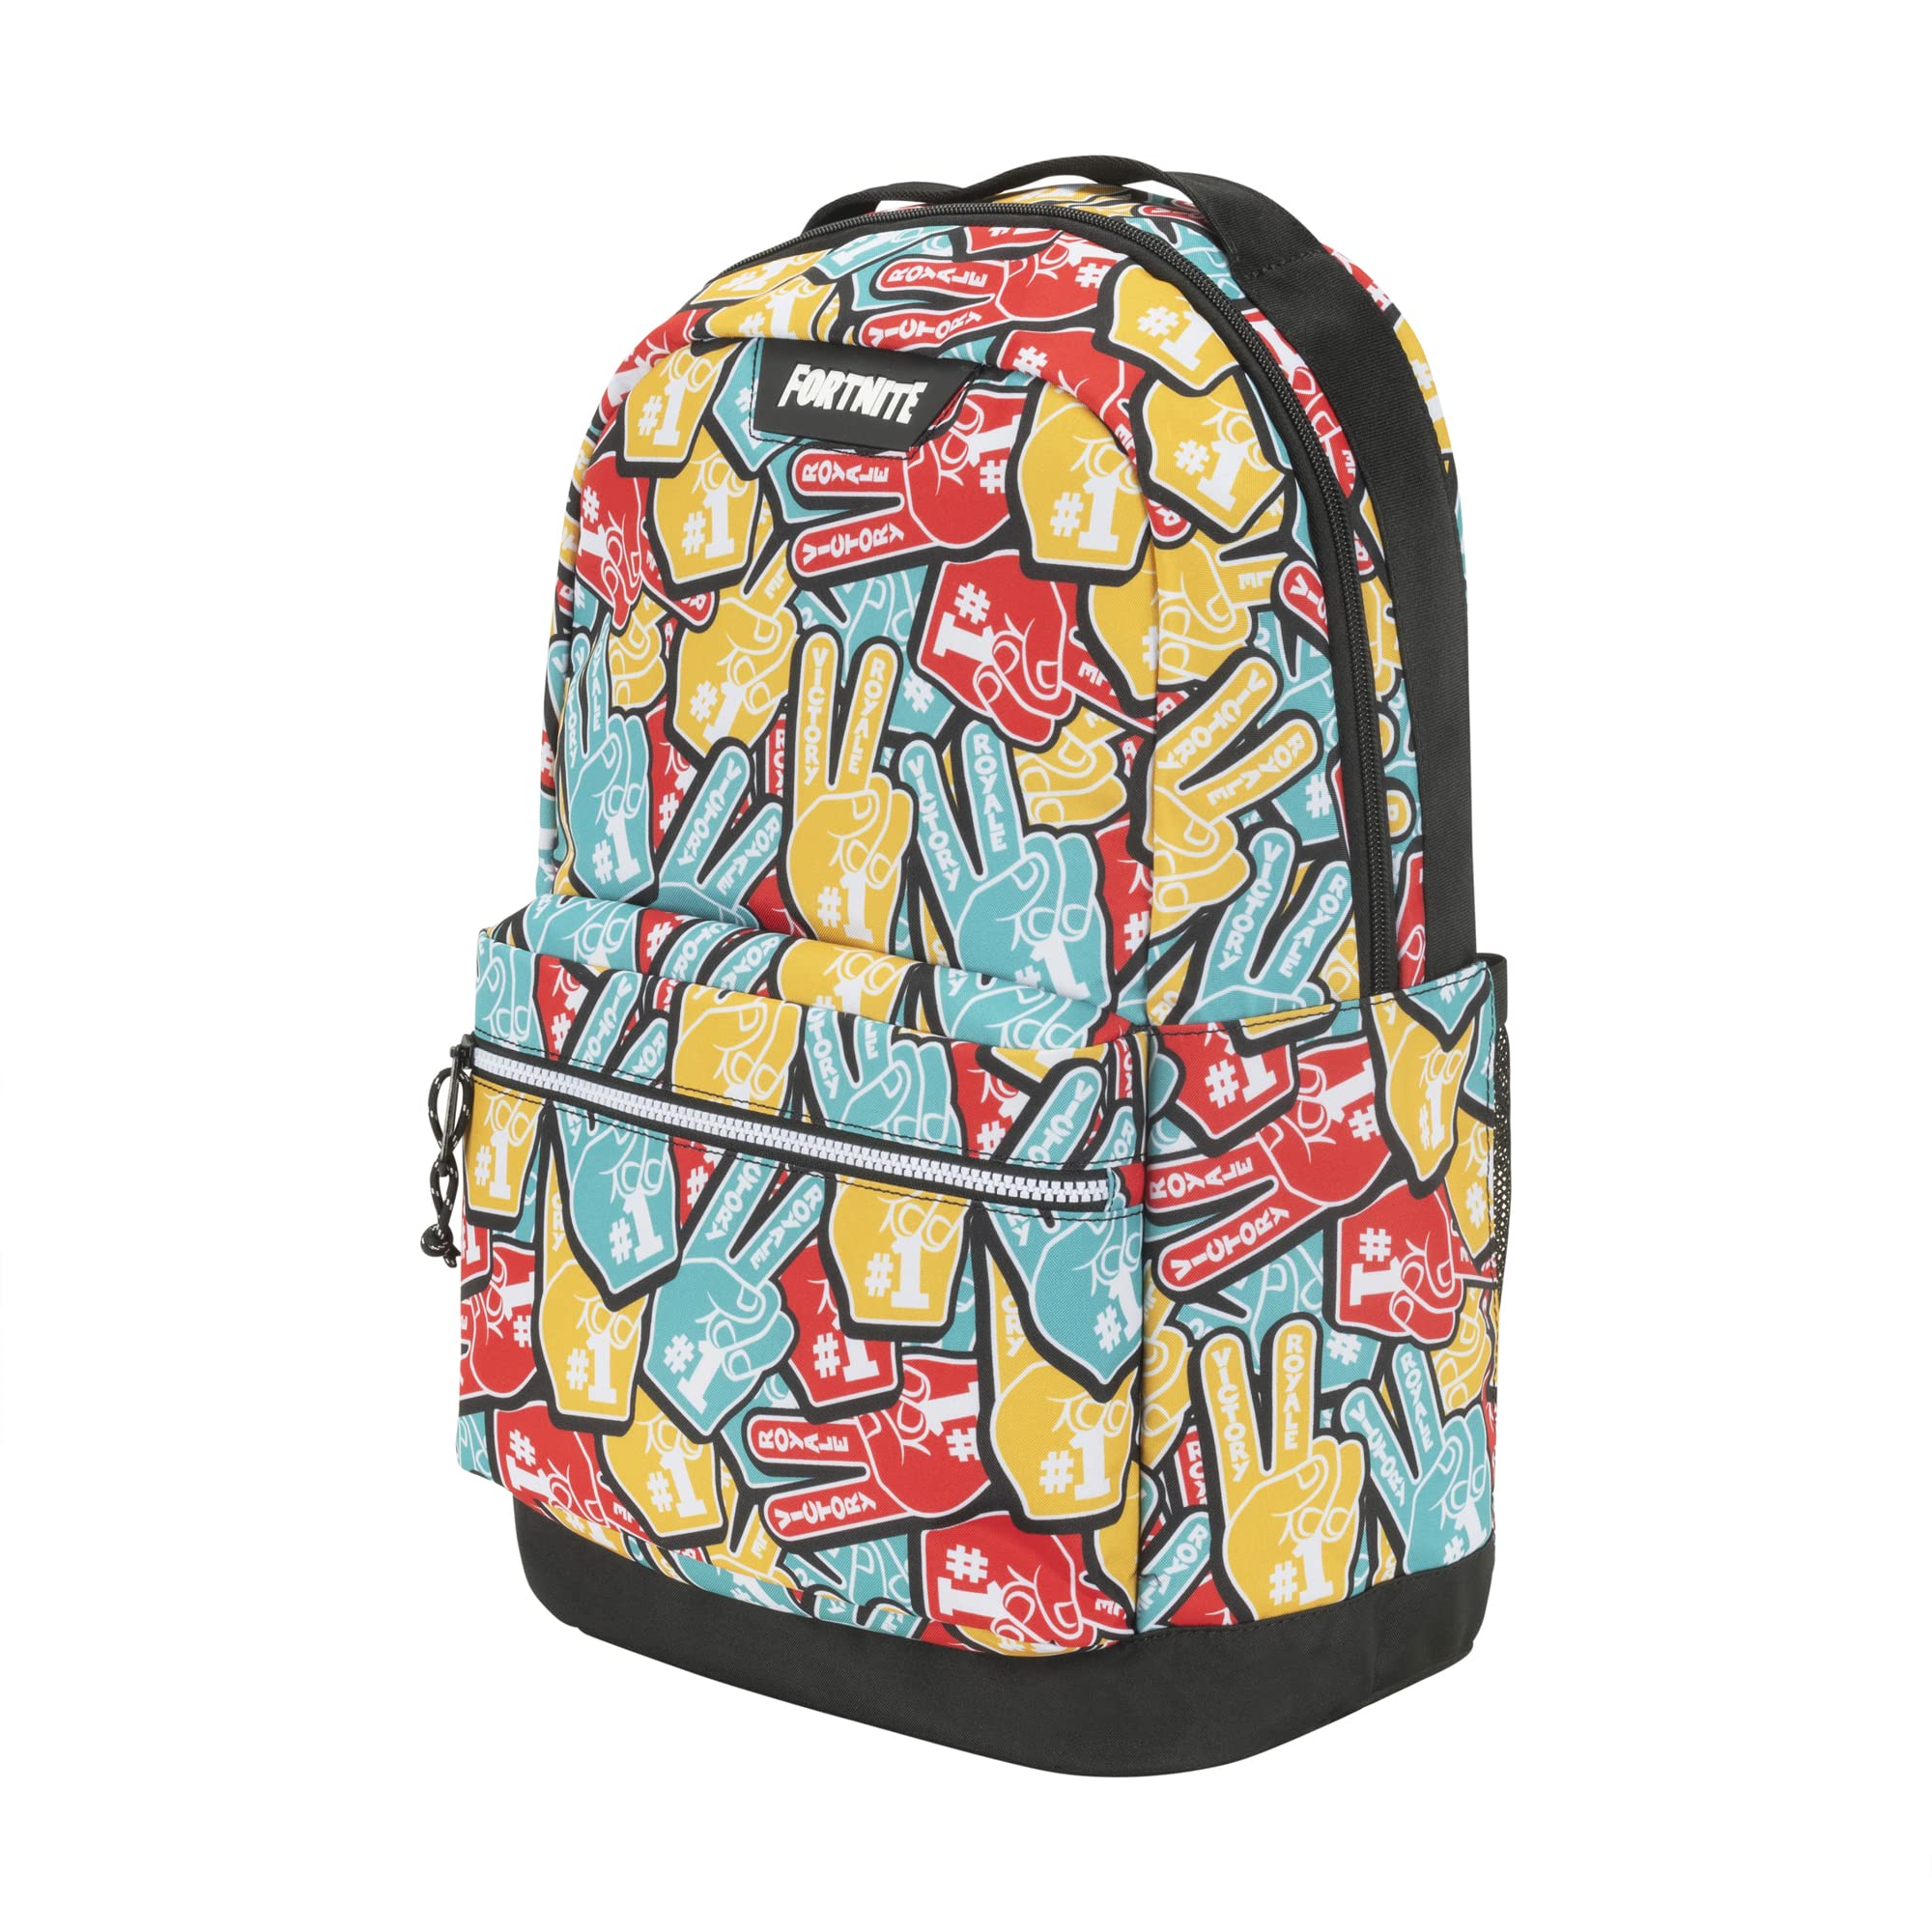 Fortnite Multiplier Backpack's: #1 Design, Lamas Design $13.89 Each & More + Free Shipping w/ Prime or on $25+